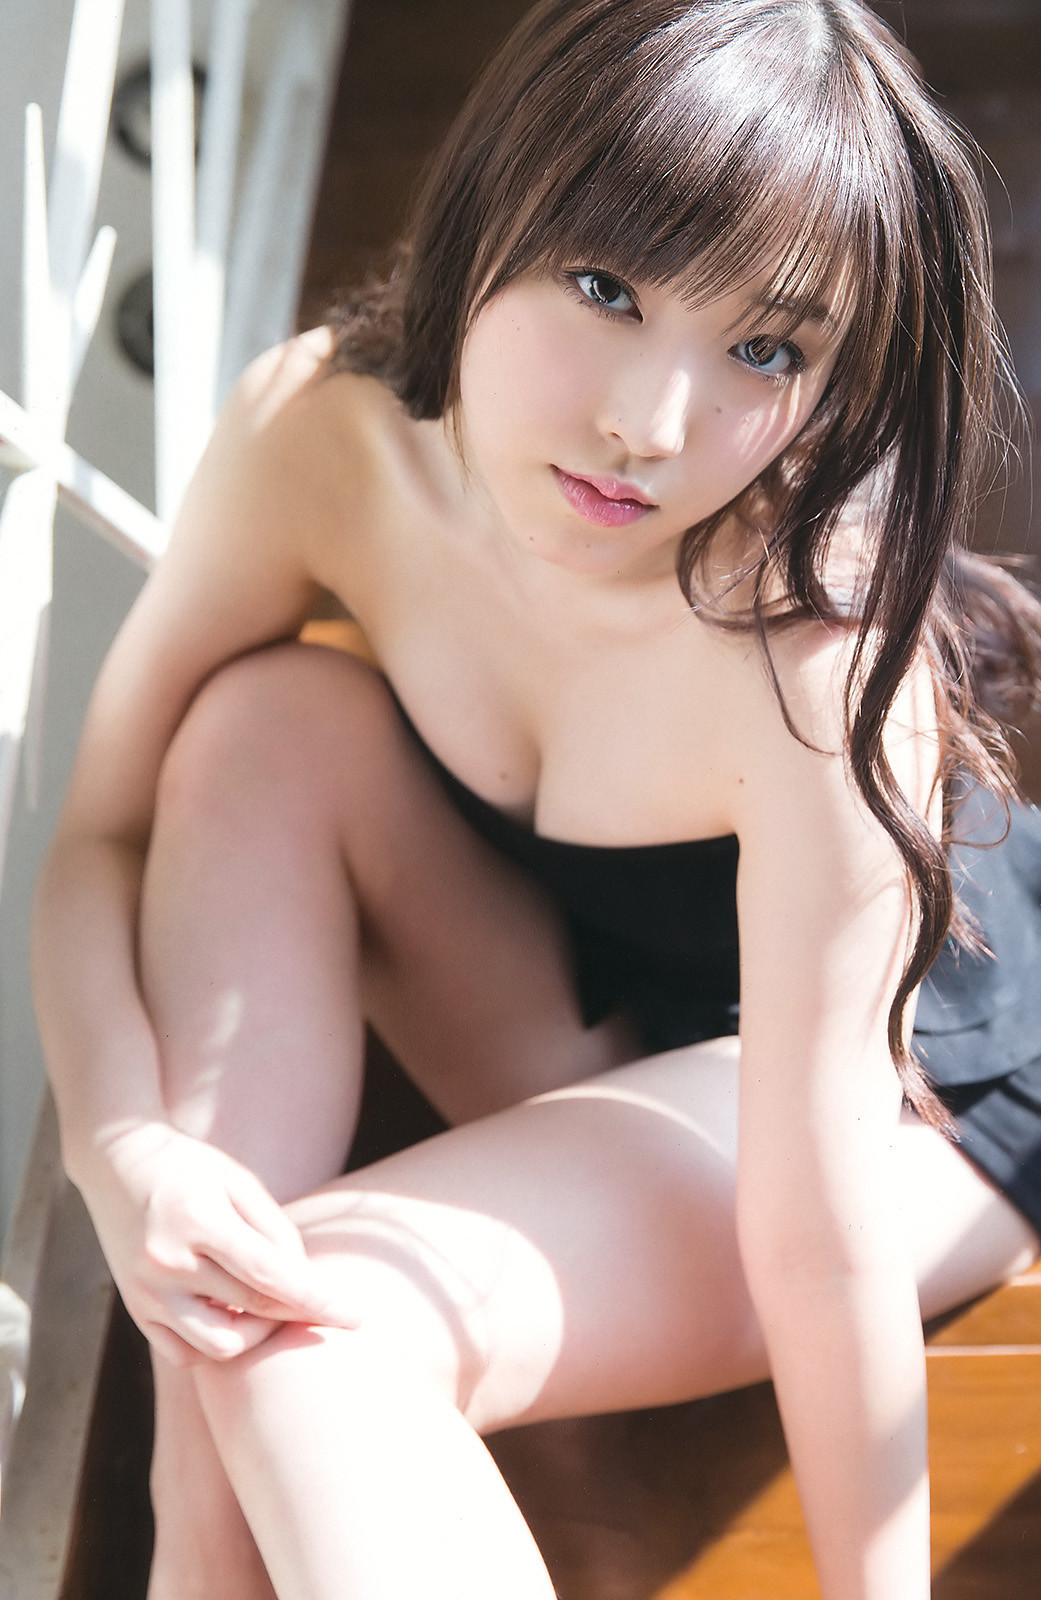 Fukumura Mizuki 譜久村聖 Morning Musume, Young Gangan Magazine No.10 2016 Special PhotoBook chapter 02